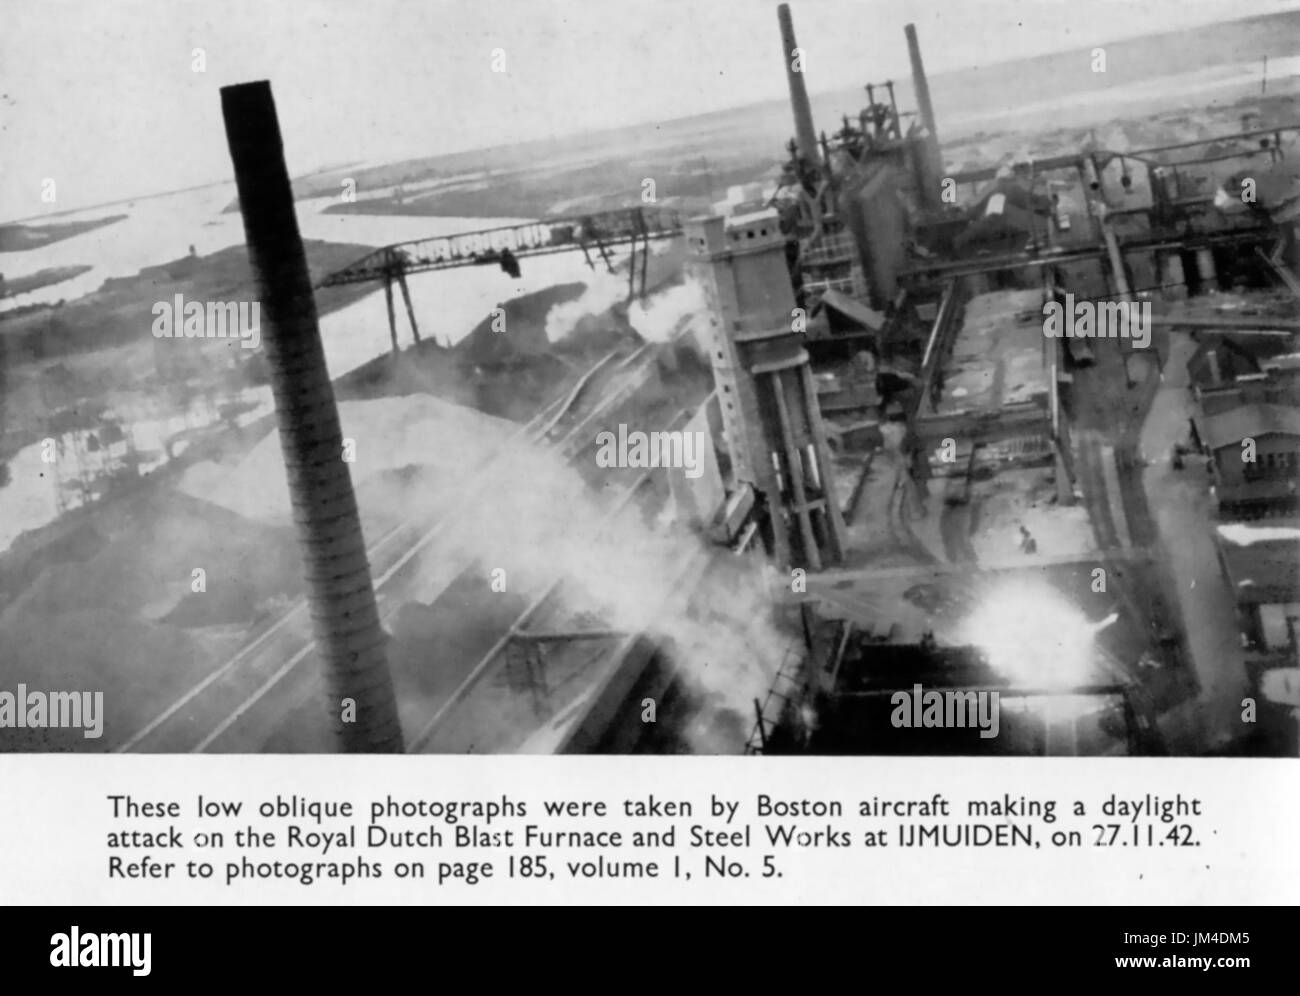 IJMDIDEN, Holland. Royal Dutch steel works attacked 27 November 1942. Photo: Evidence in Camera Stock Photo